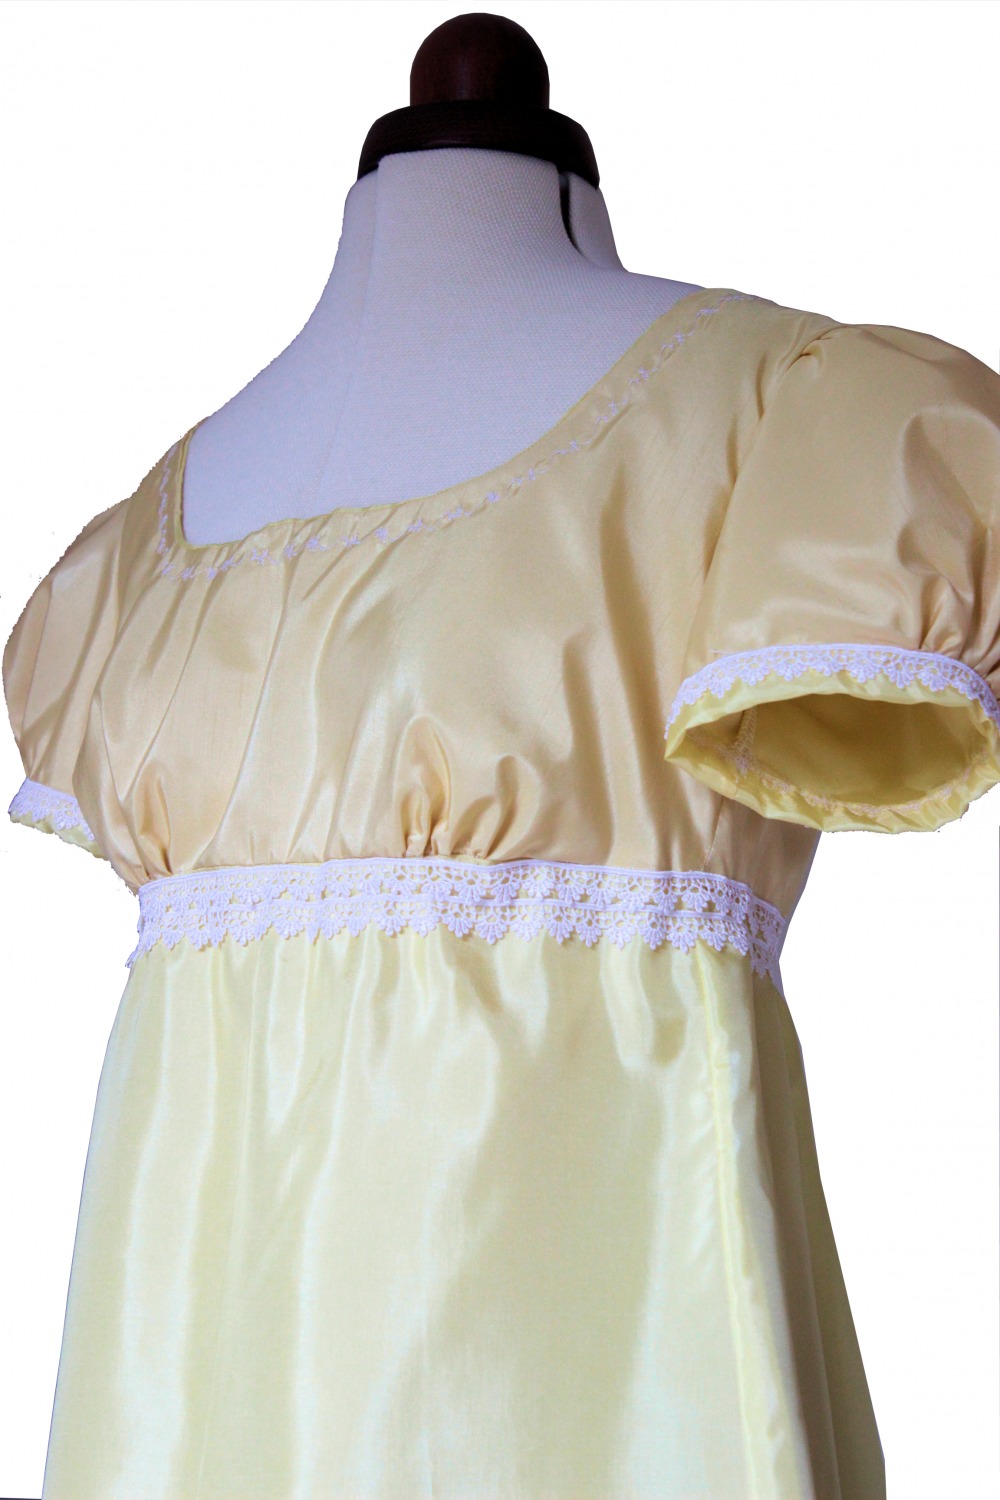 Ladies/ Older Girl's 19th Century Jane Austen Regency Evening Ball Gown Size 10 - 12 Image